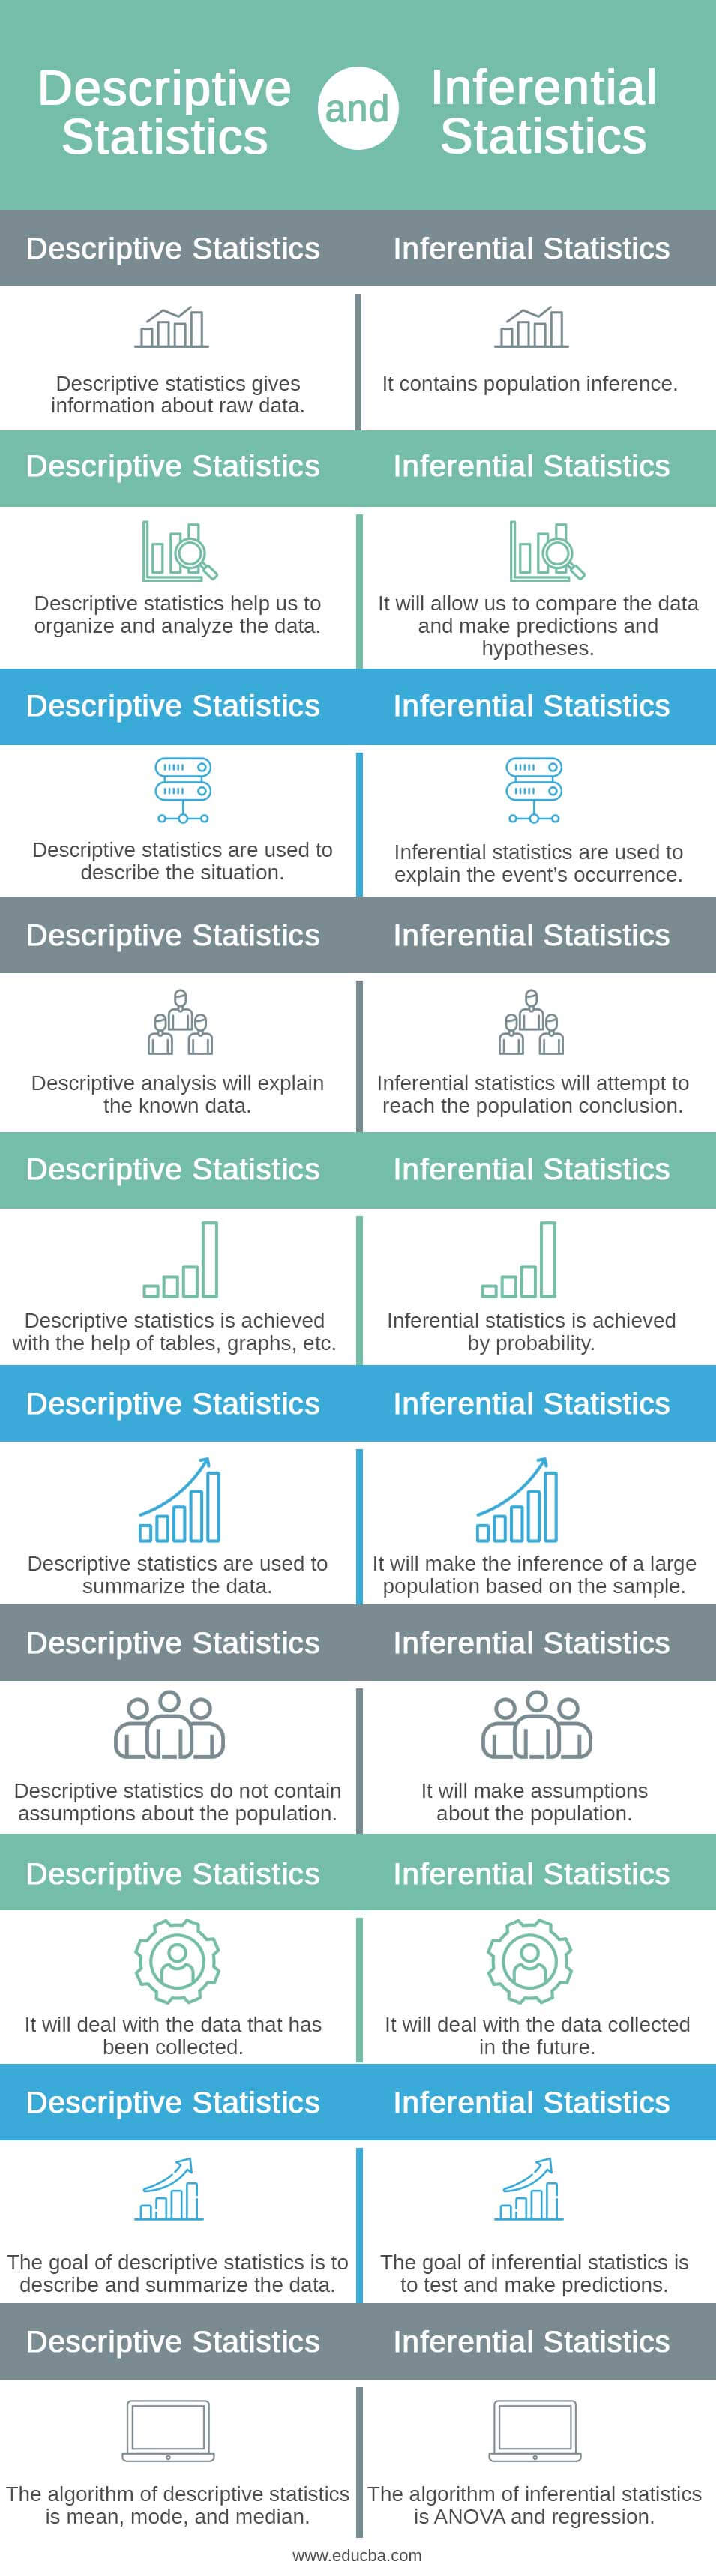 Descriptive and Inferential Statistics info